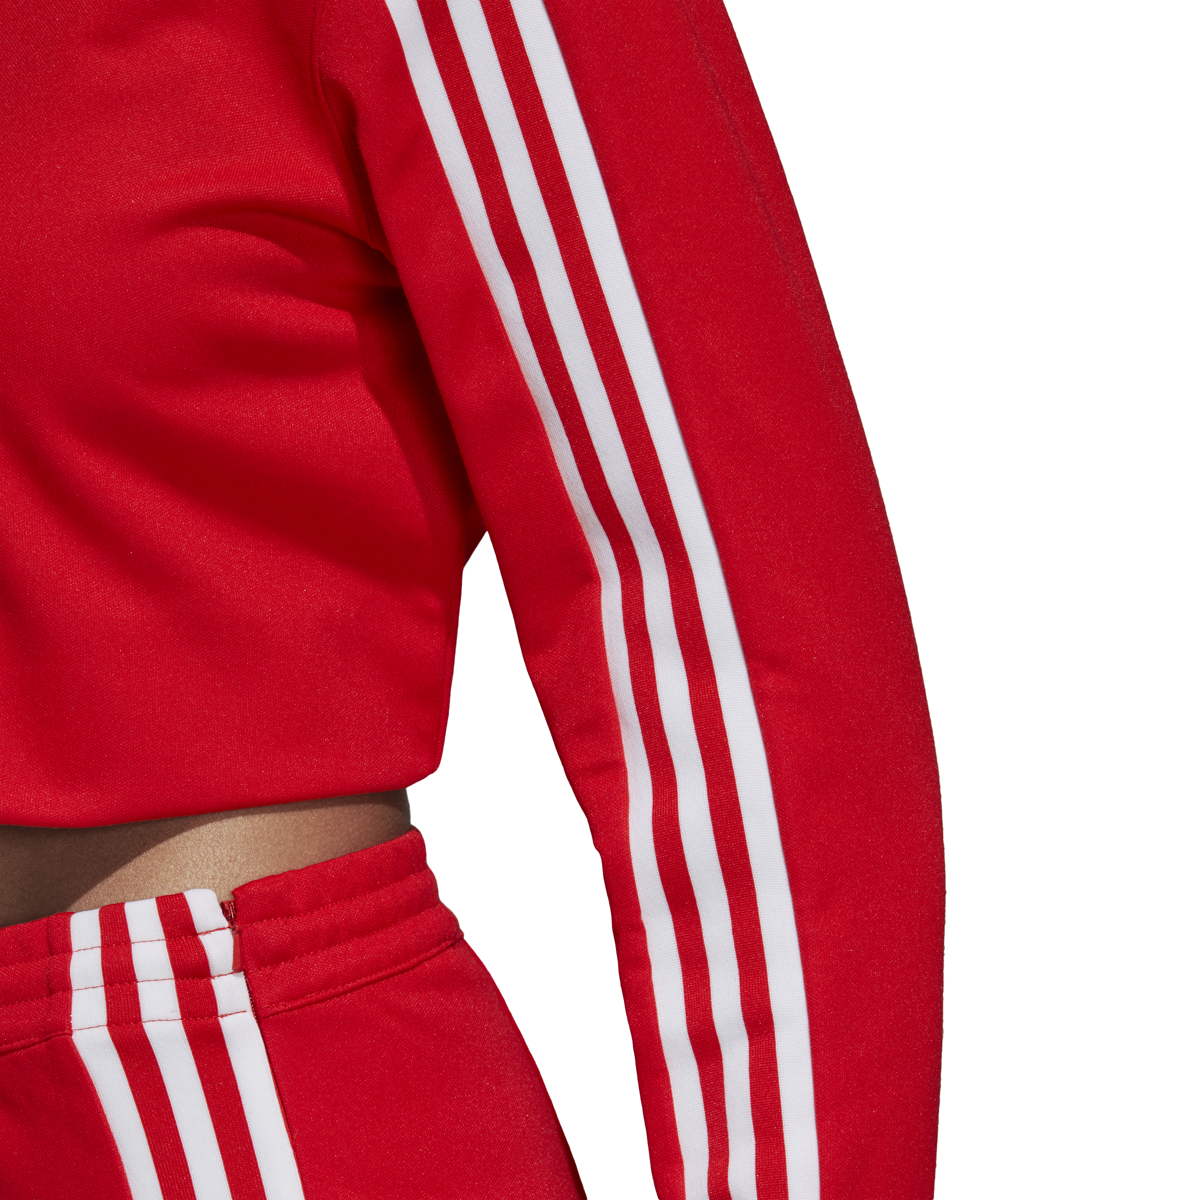 adidas red crop jacket